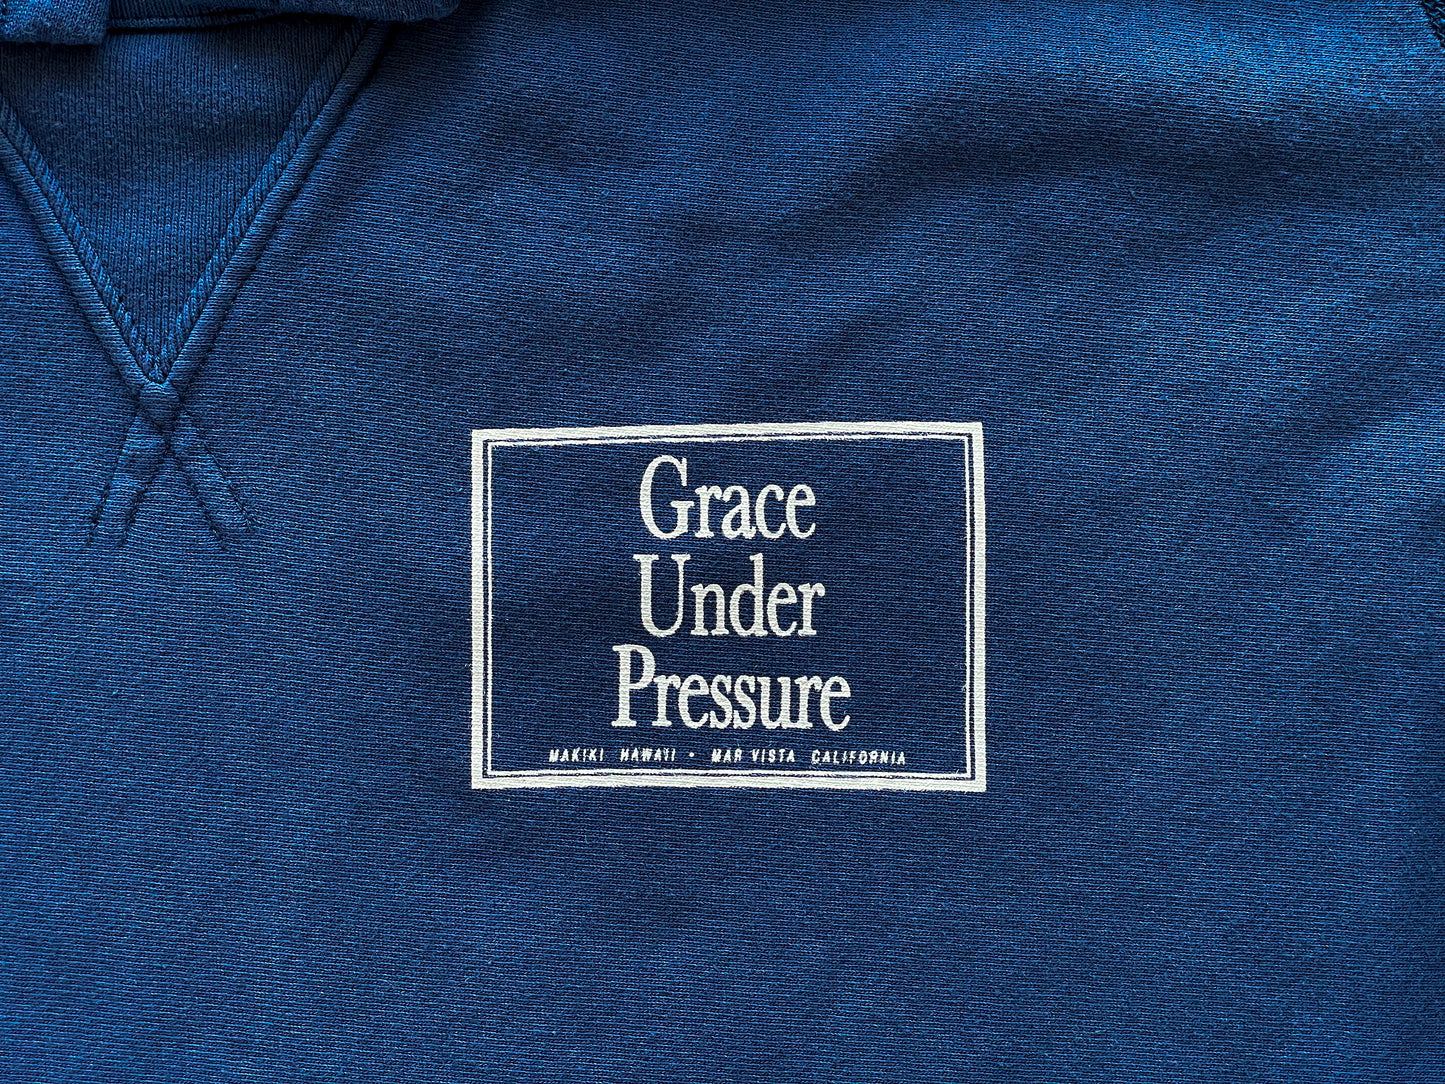 Grace Under Pressure Pull-over Hooded Sweatshirt (Navy)